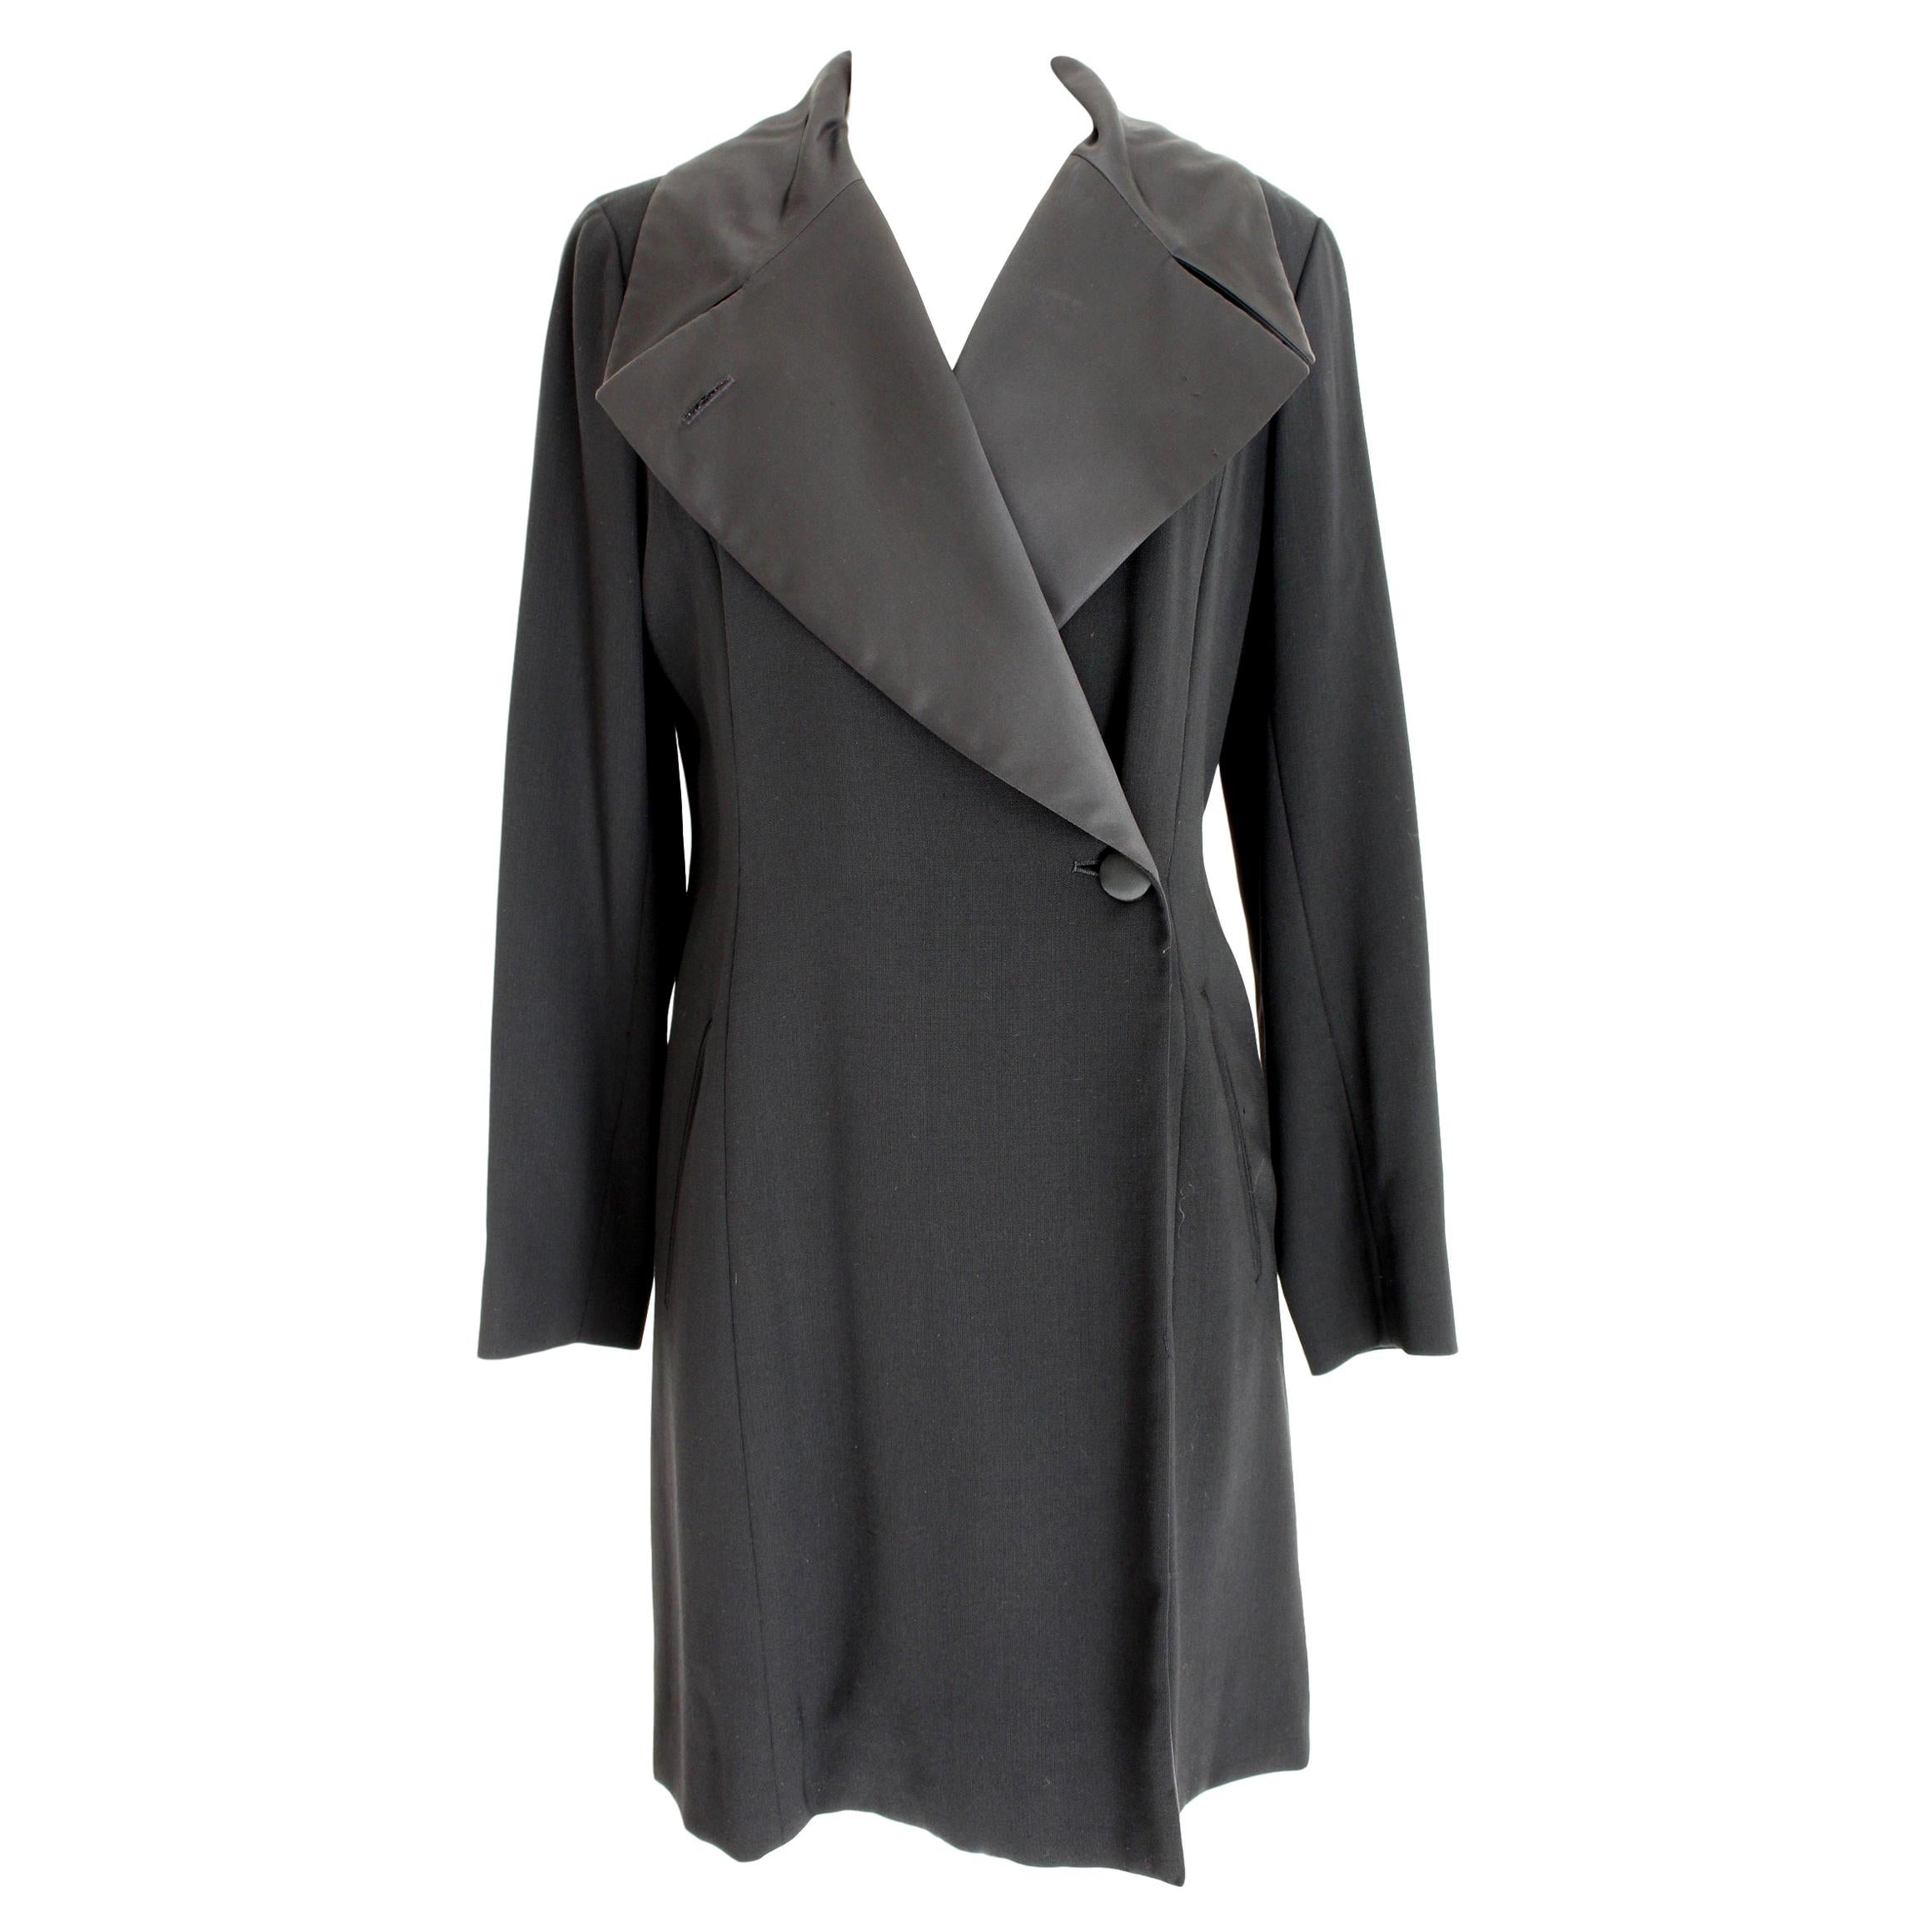 Kenzo Paris Black Wool Long Jacket Coat 1990s Shinny Lapel One Button